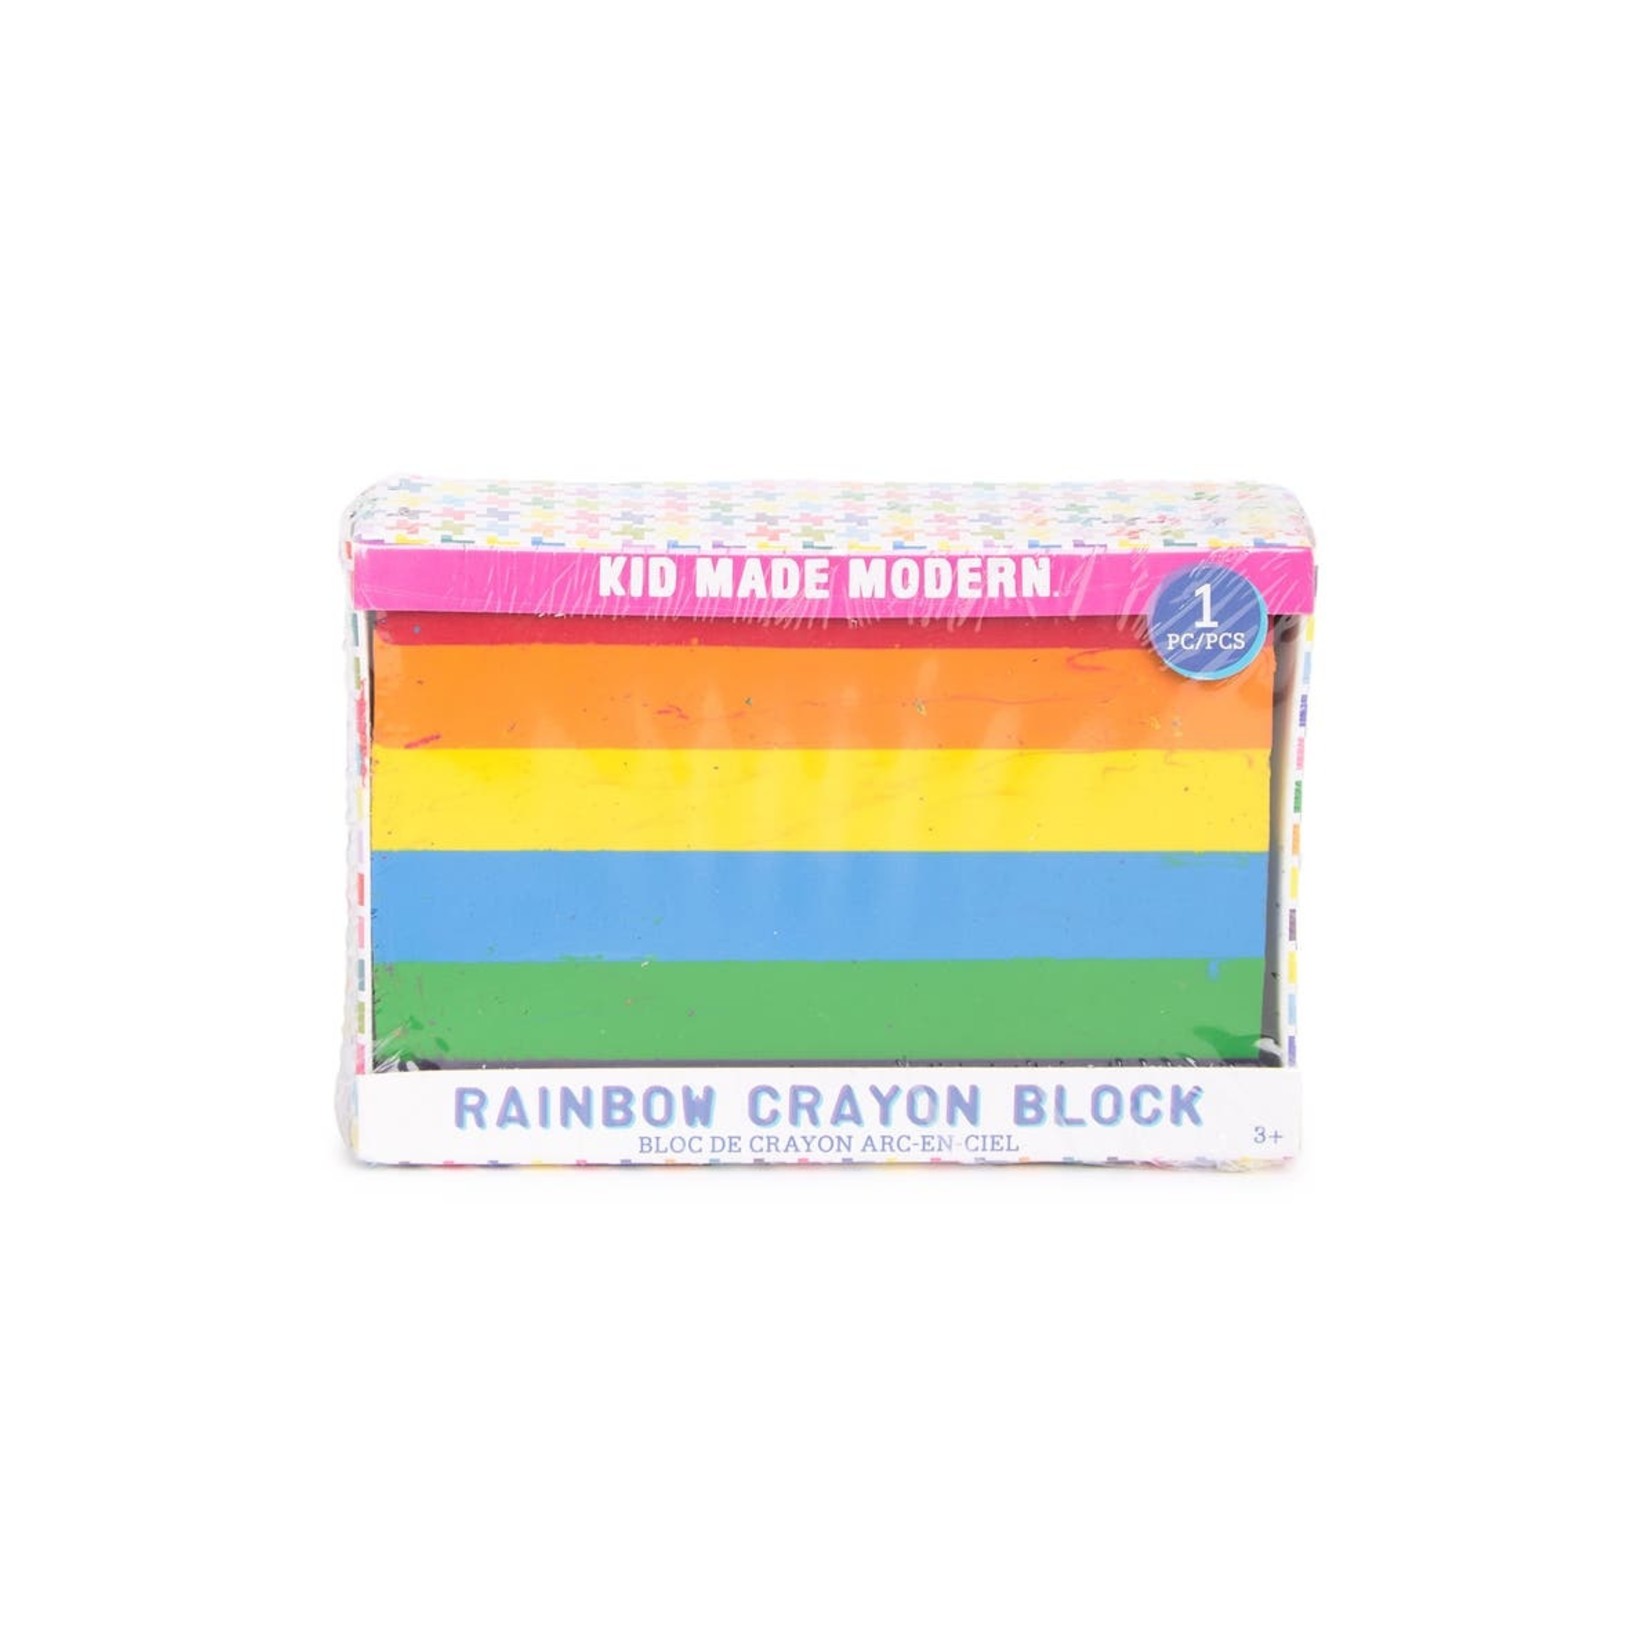 Kid Made Modern rainbow crayon block